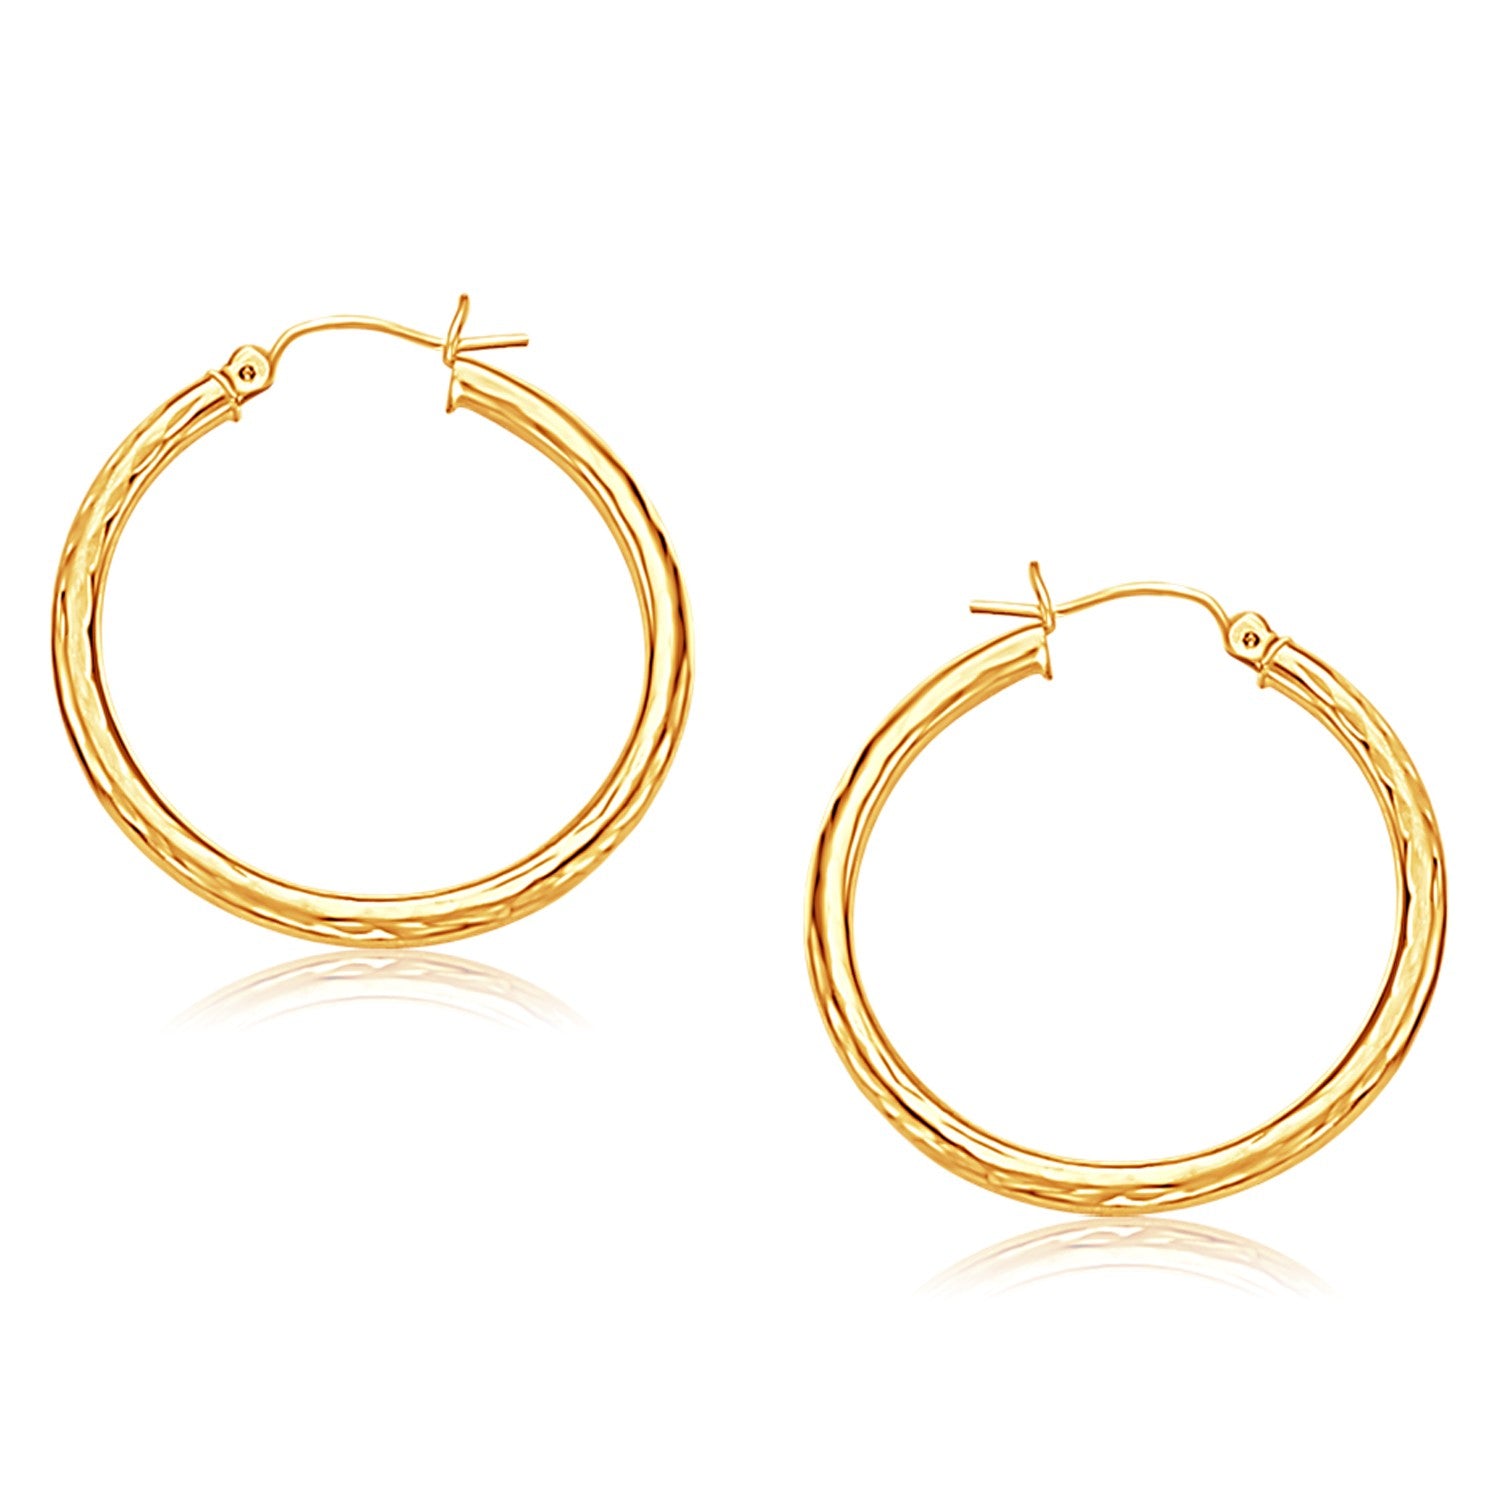 14k Yellow Gold Hoop Earring with Diamond-Cut Finish (30 mm Diameter)